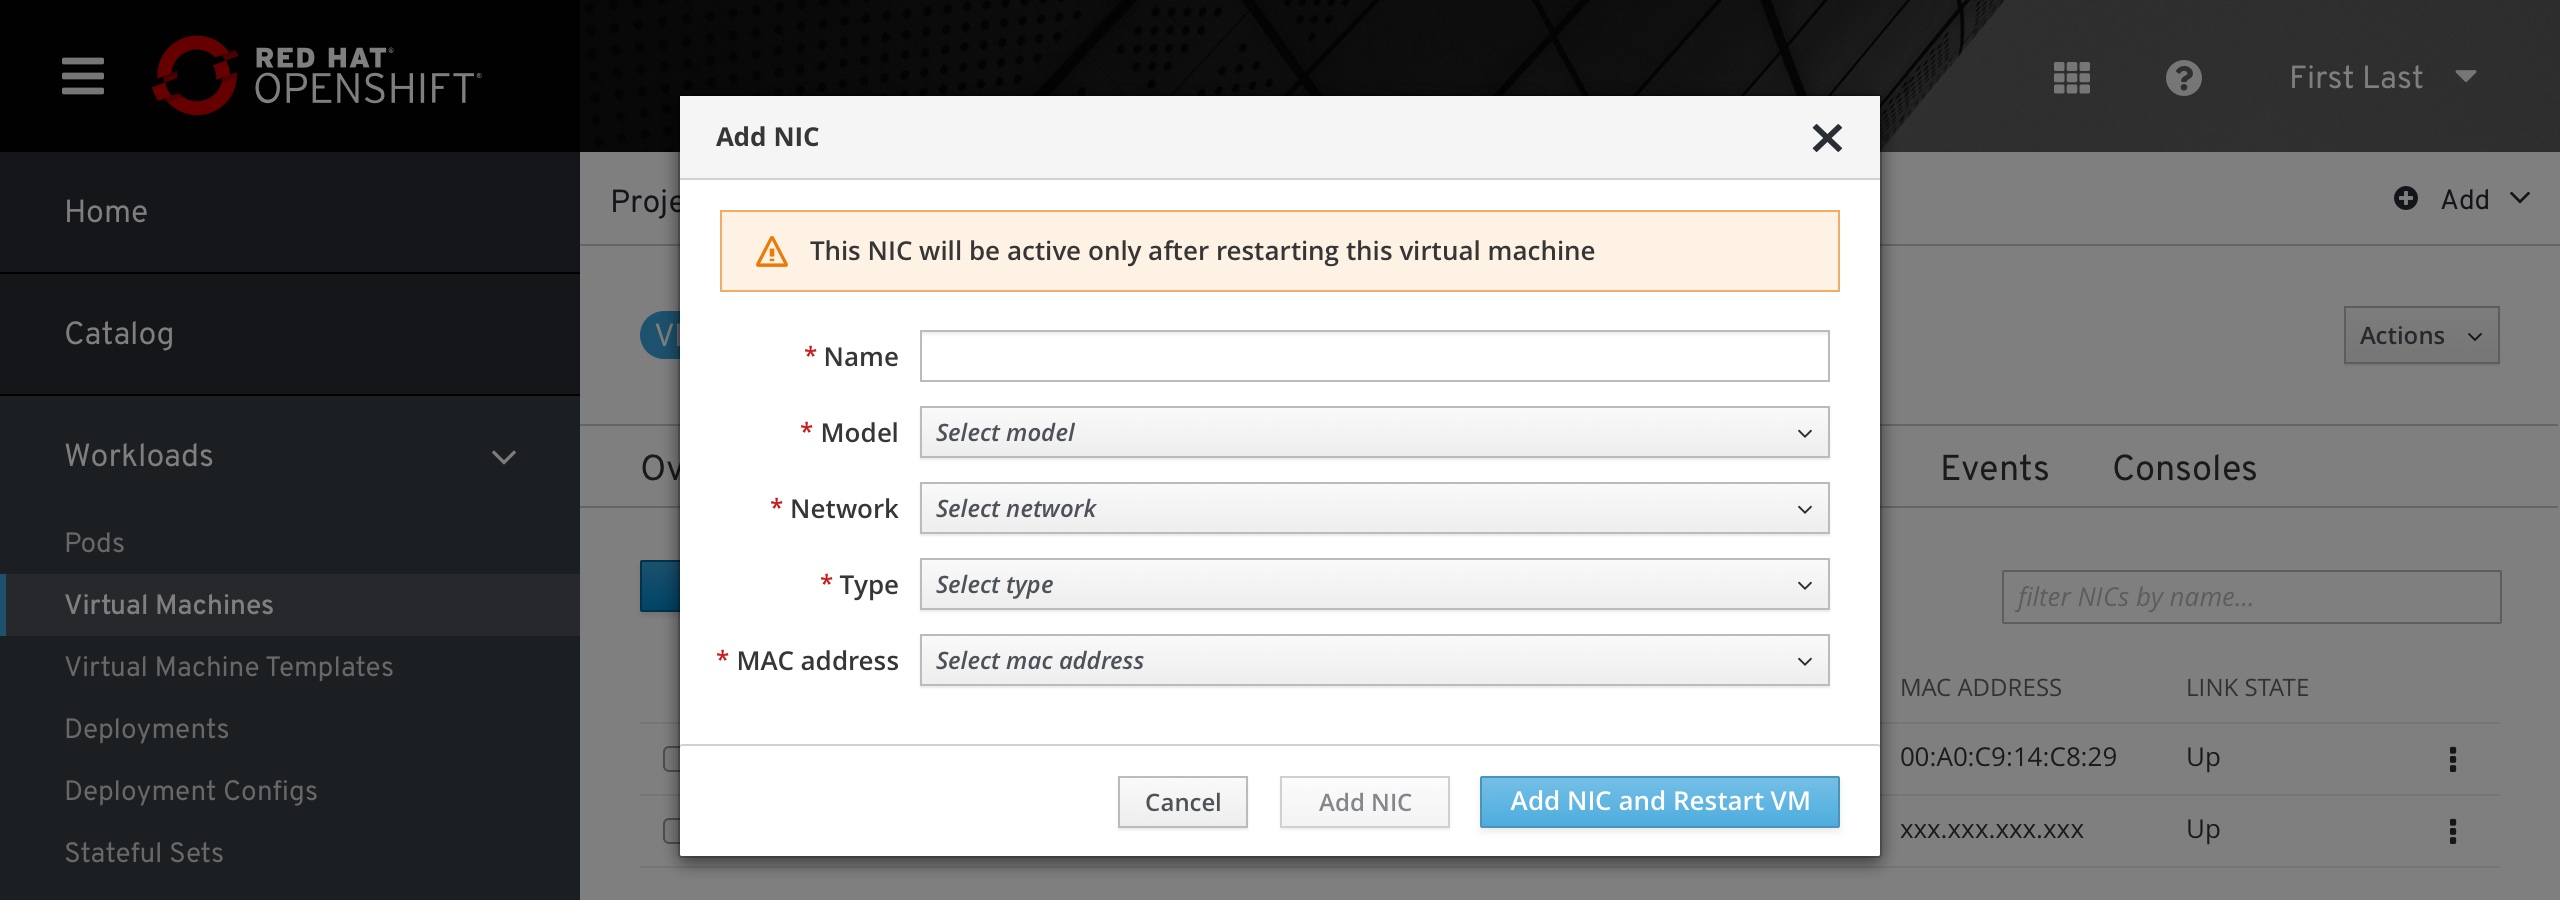 VM - add NIC modal